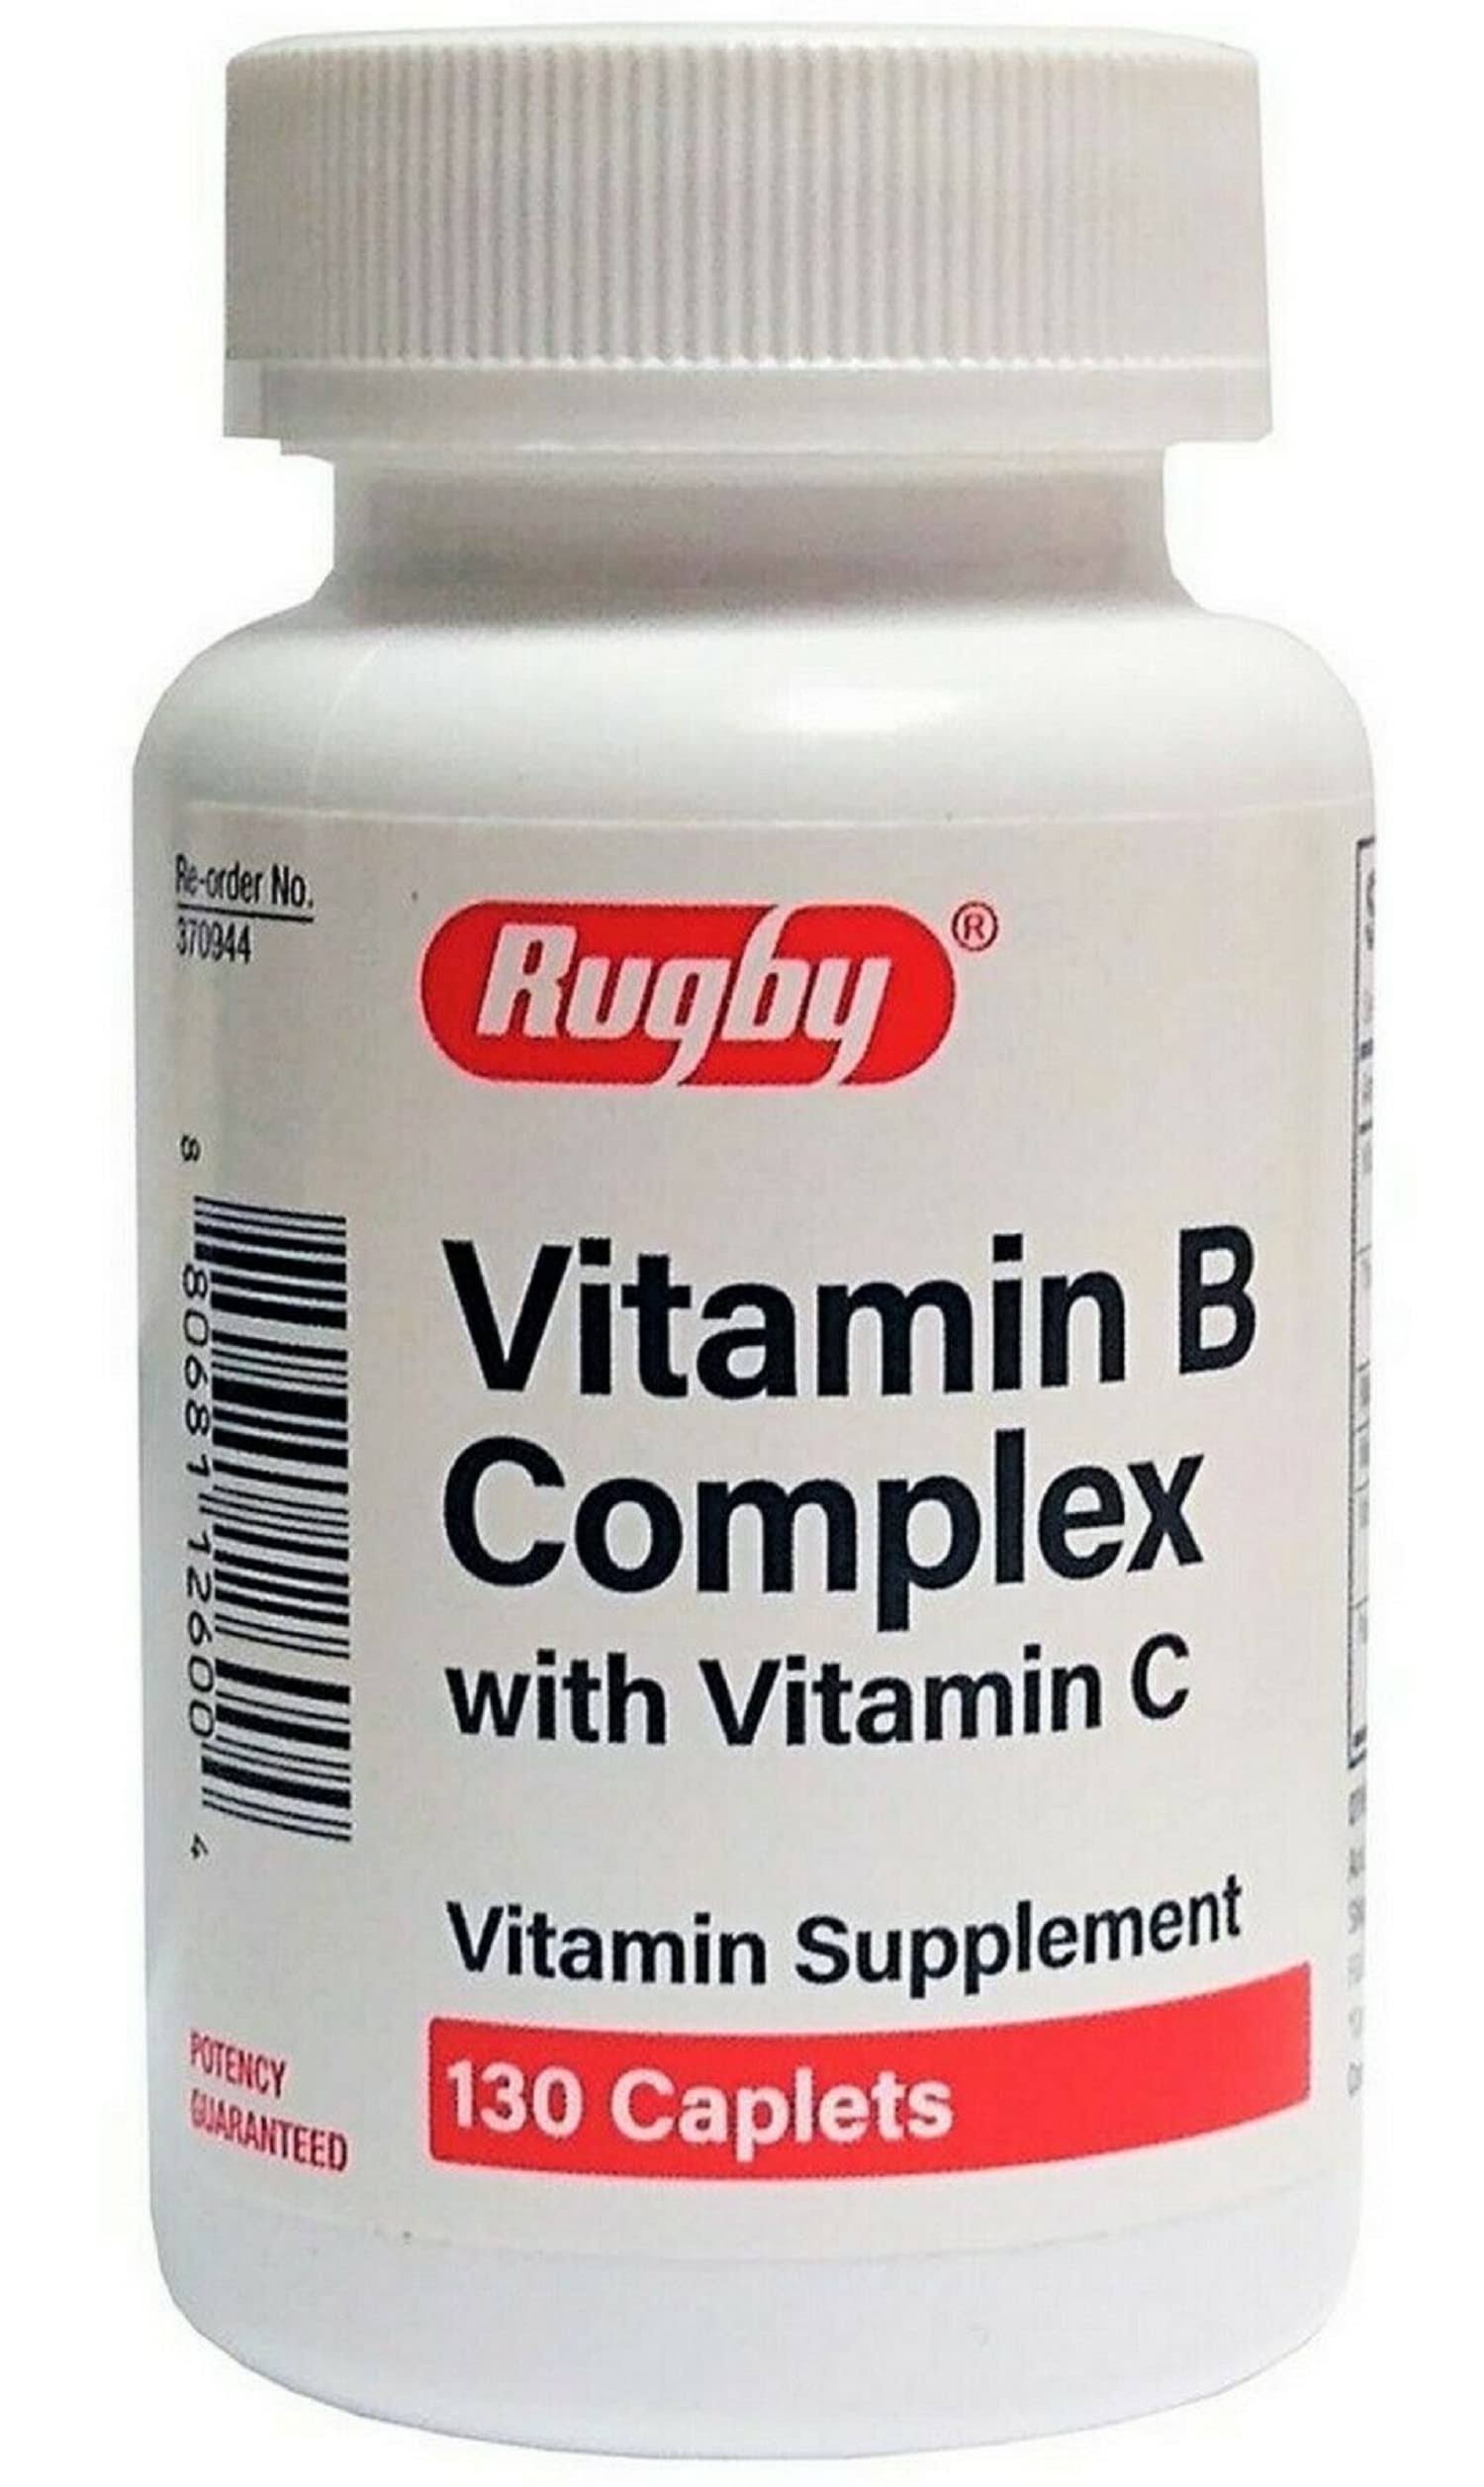 Rugby Vitamin B Complex with Vitamin C Vitamin Supplement 130 Caplets